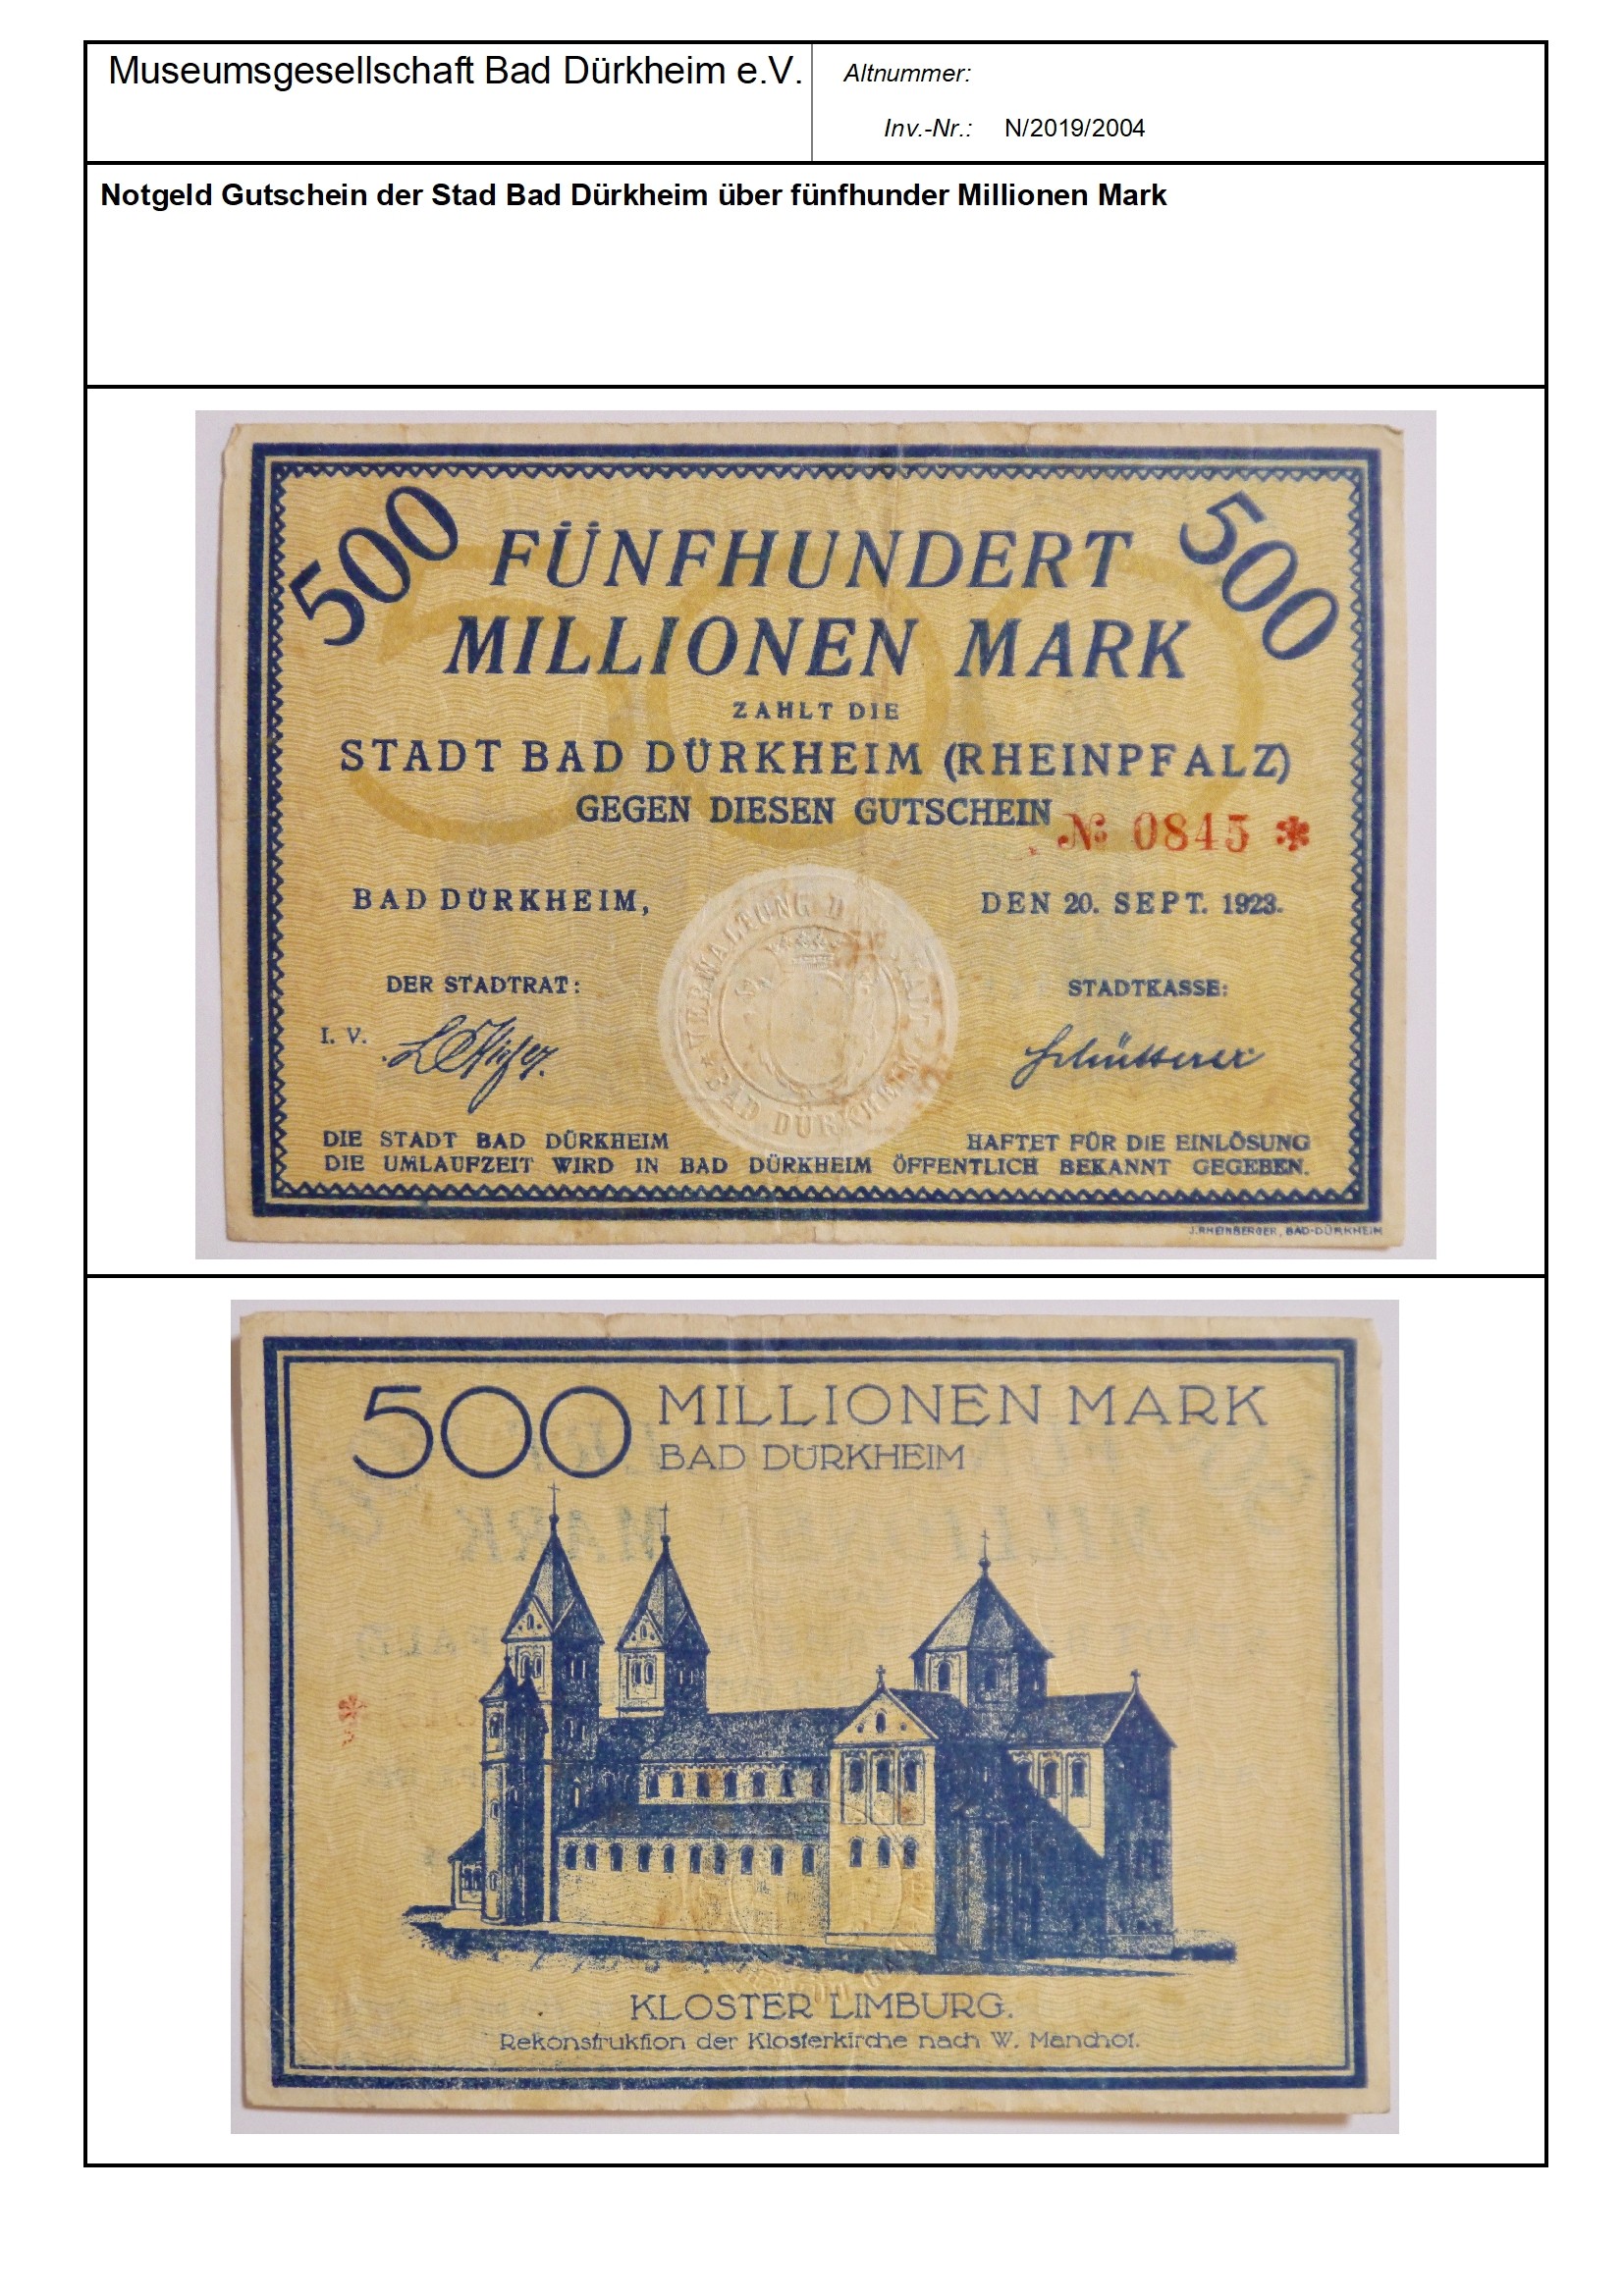 Notgeld Gutschein der Stad Bad Dürkheim über fünfhundert Millionen Mark
Serien-Nummer: No 0845* (Museumsgesellschaft Bad Dürkheim e.V. CC BY-NC-SA)